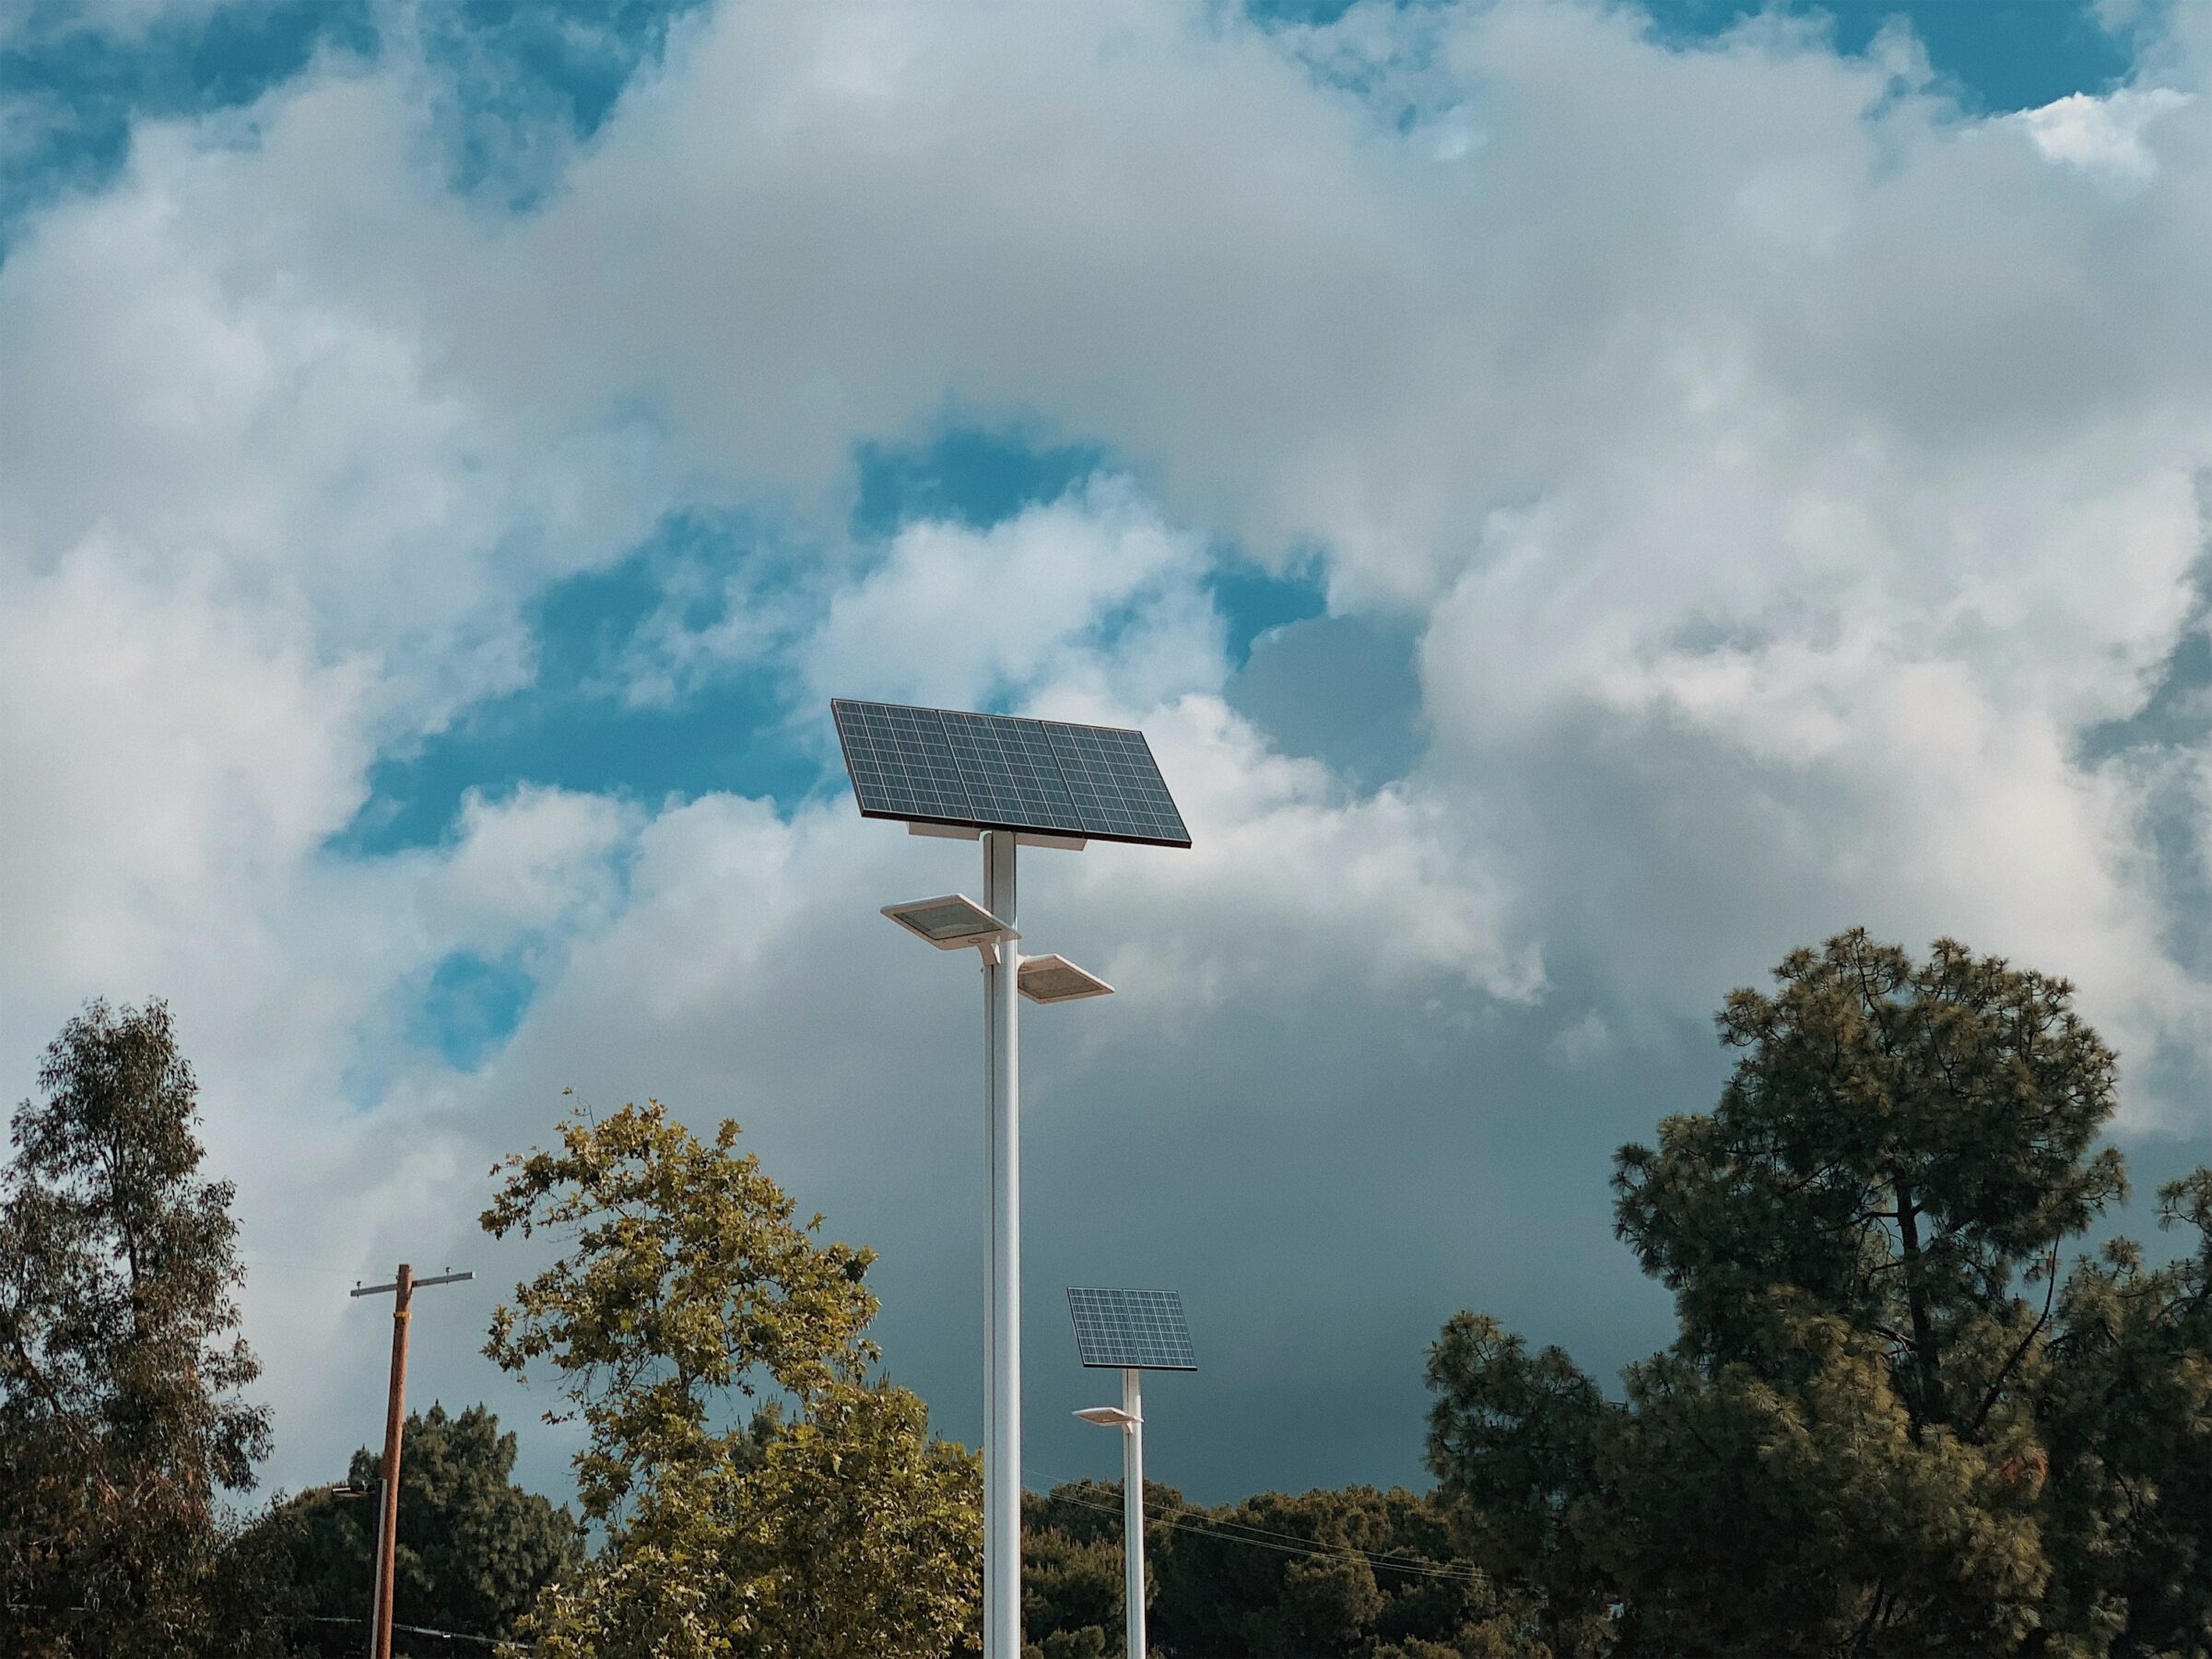 Singular solar panel on a pole